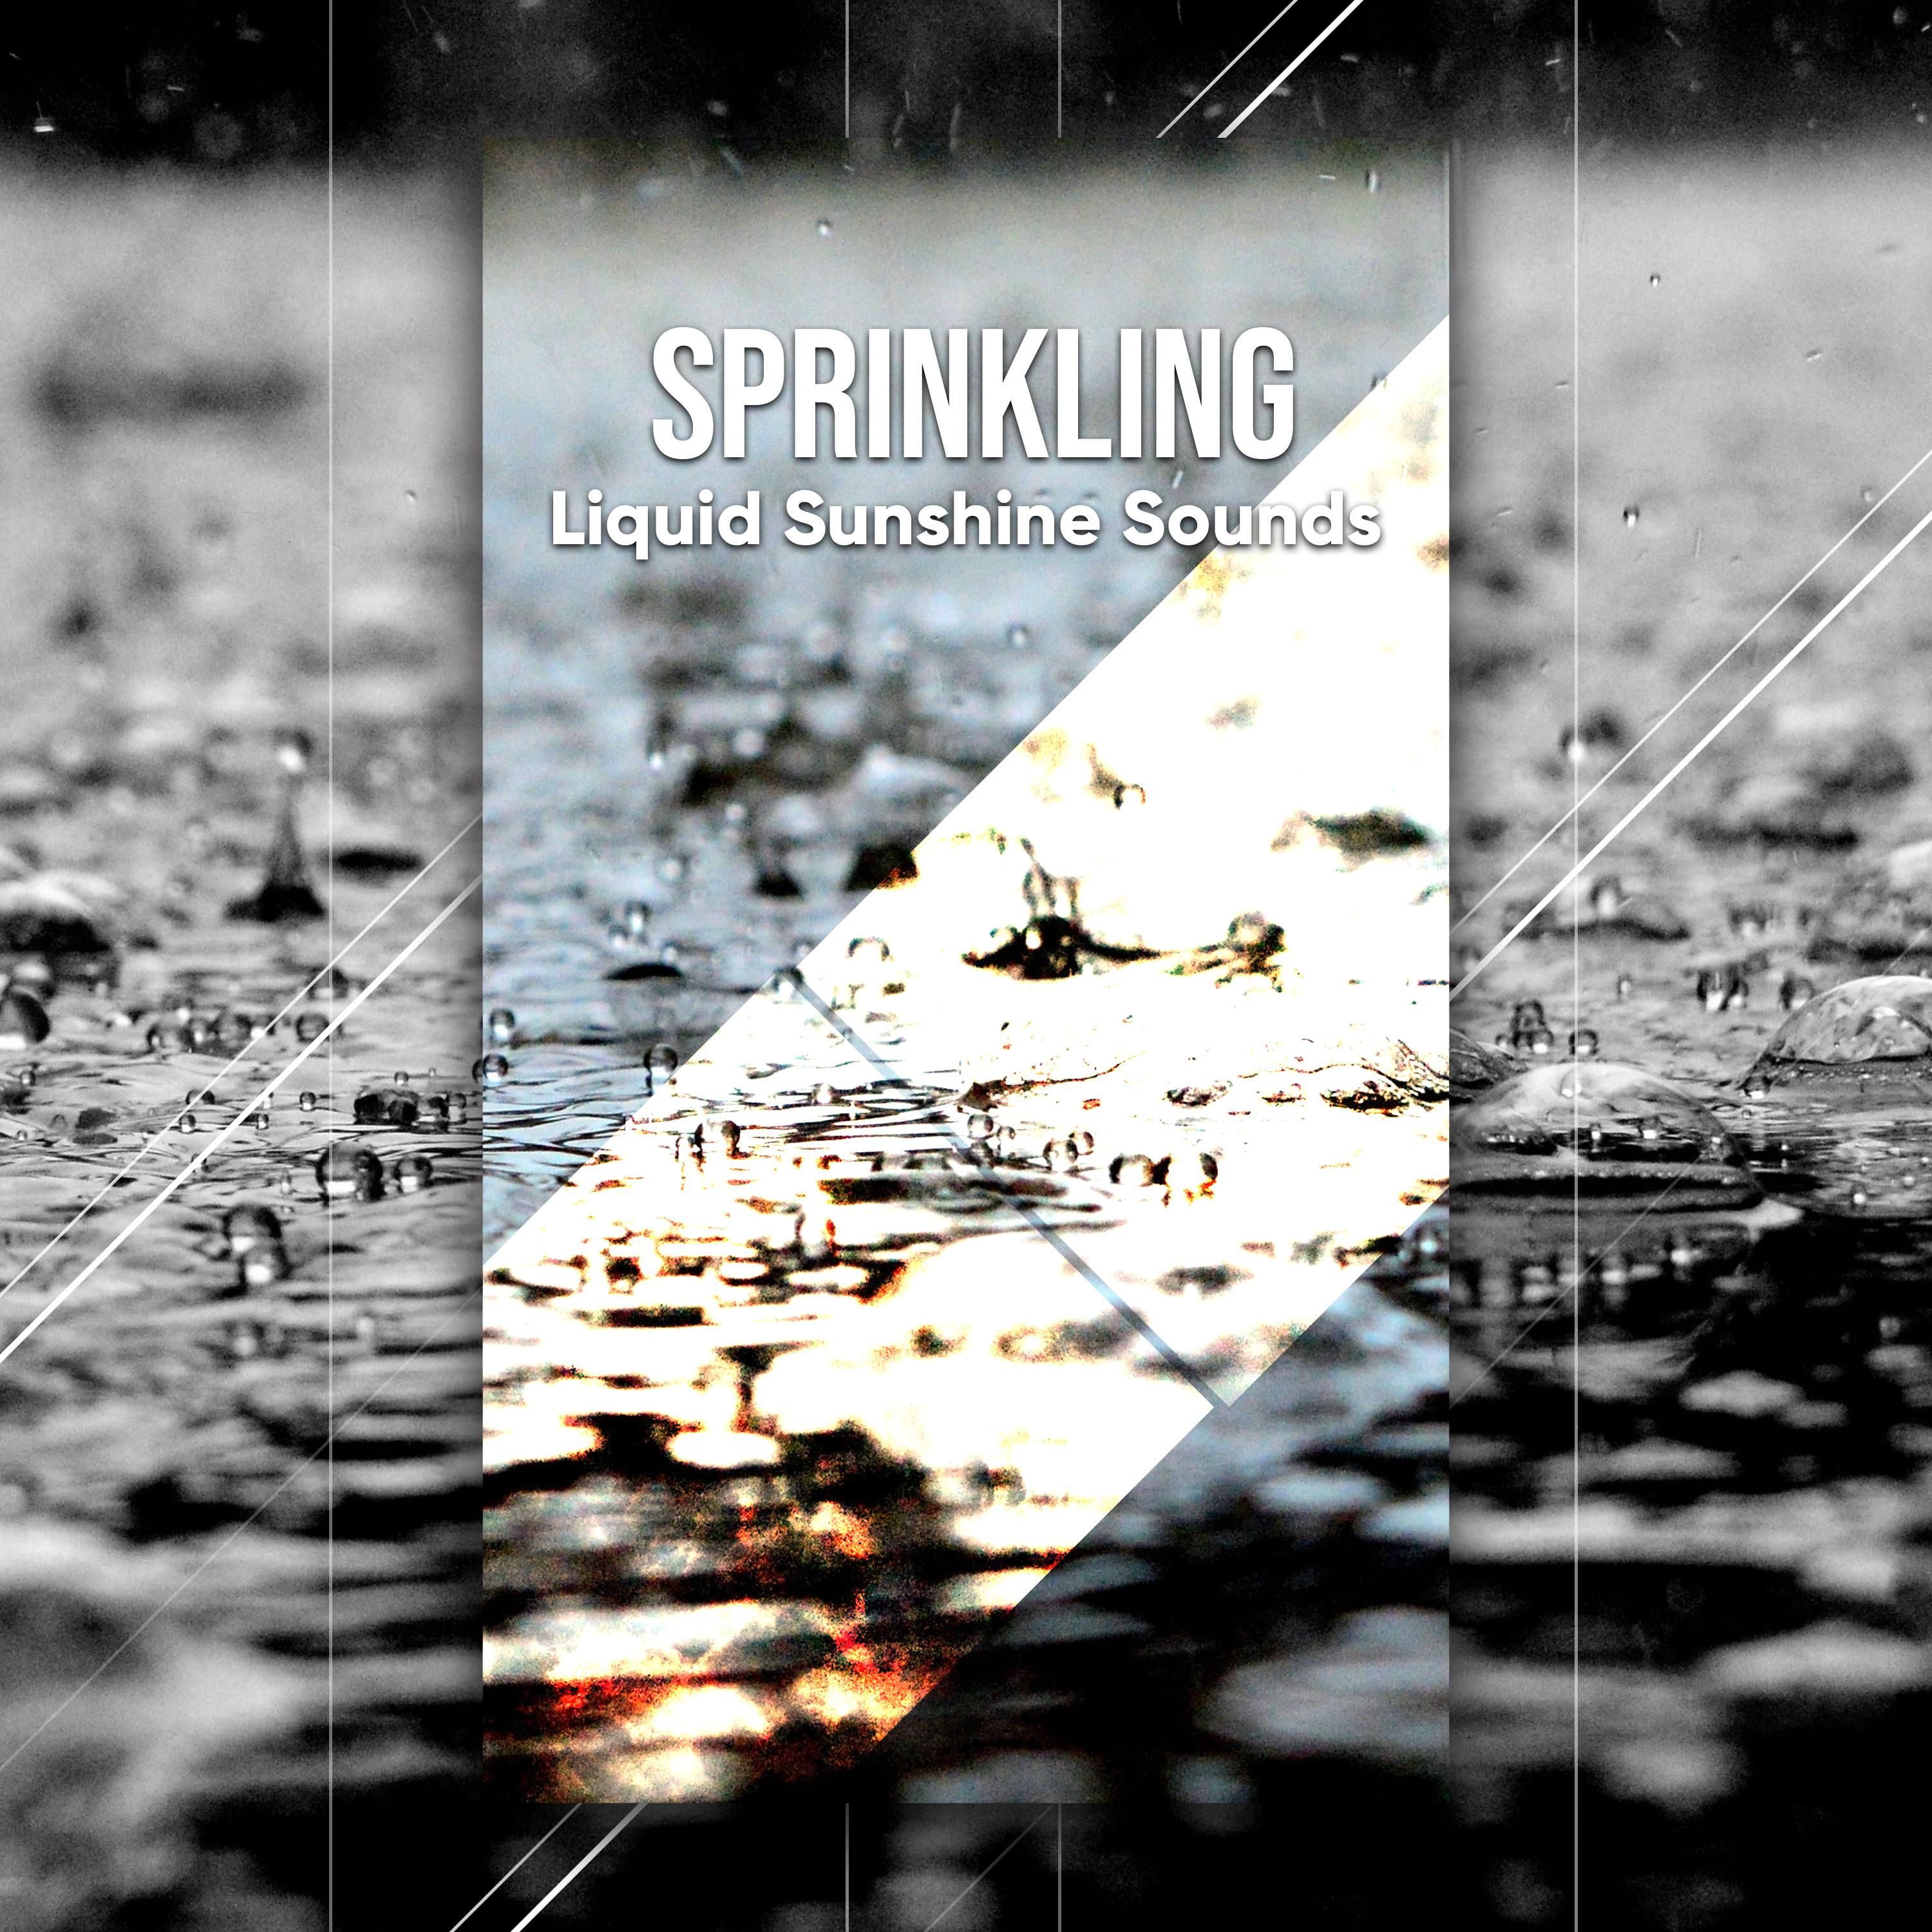 #10 Sprinkling Liquid Sunshine Sounds for Sleep